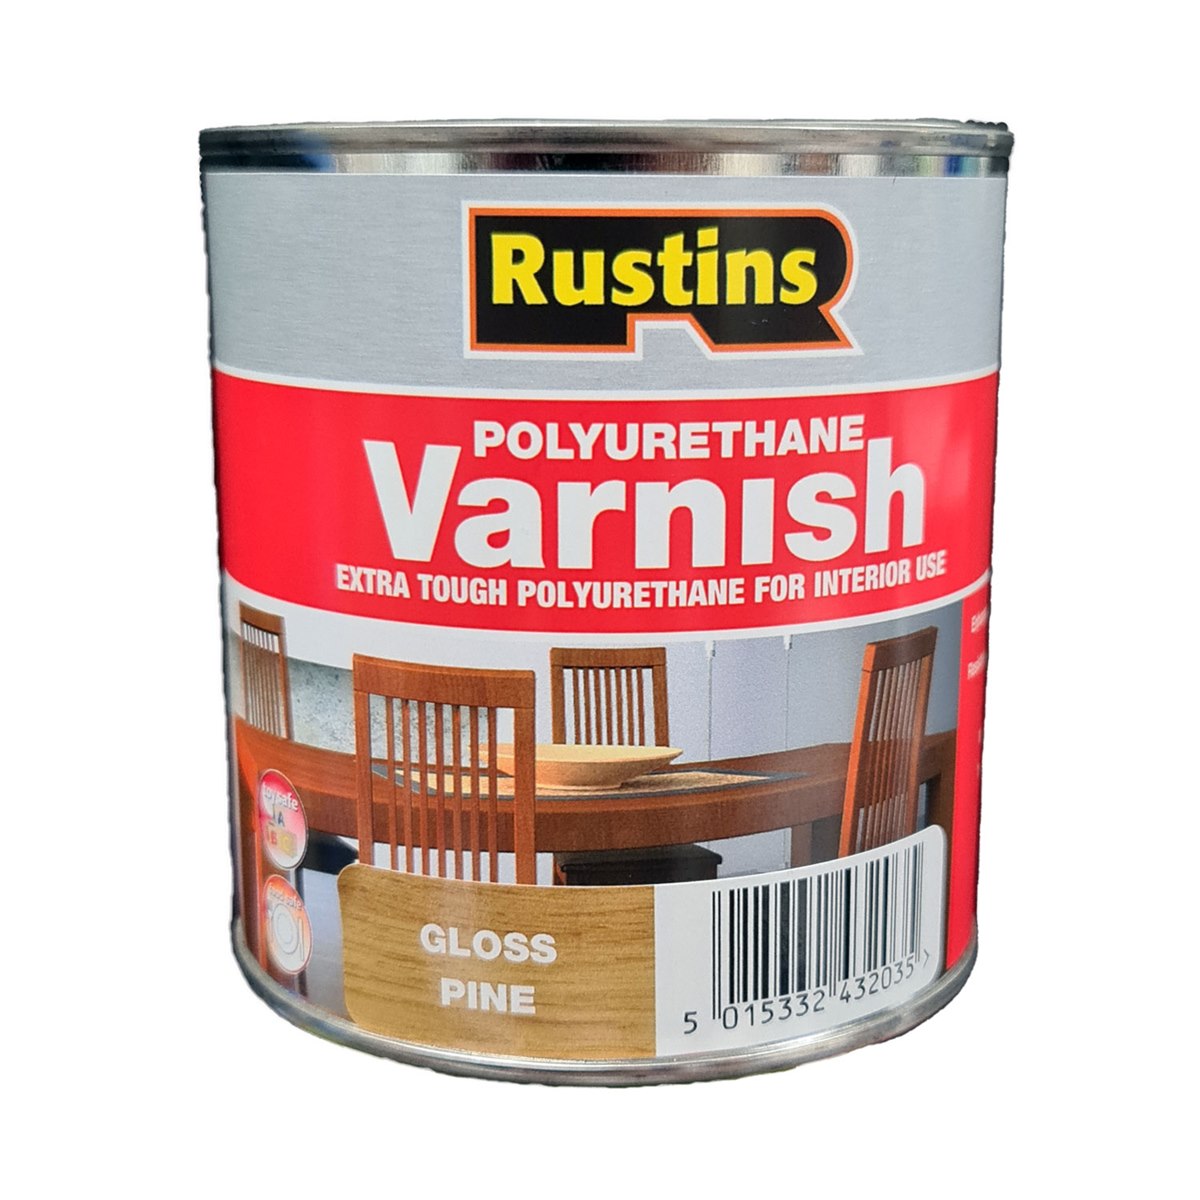 Rustins Polyurethane Varnish Gloss Pine 250ml